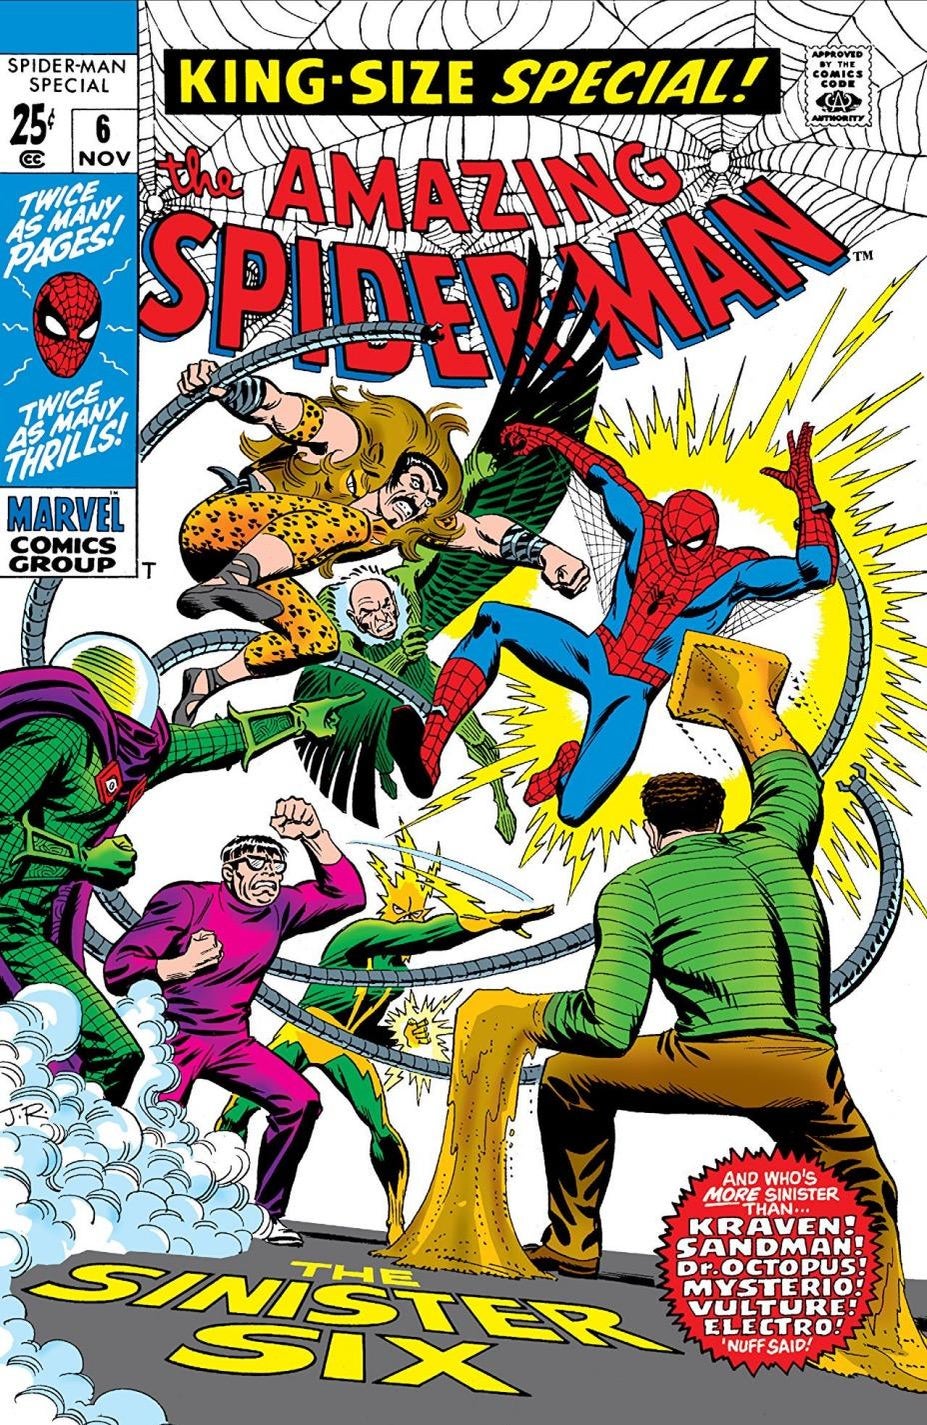 spider-man-vs-sinister-six.jpg